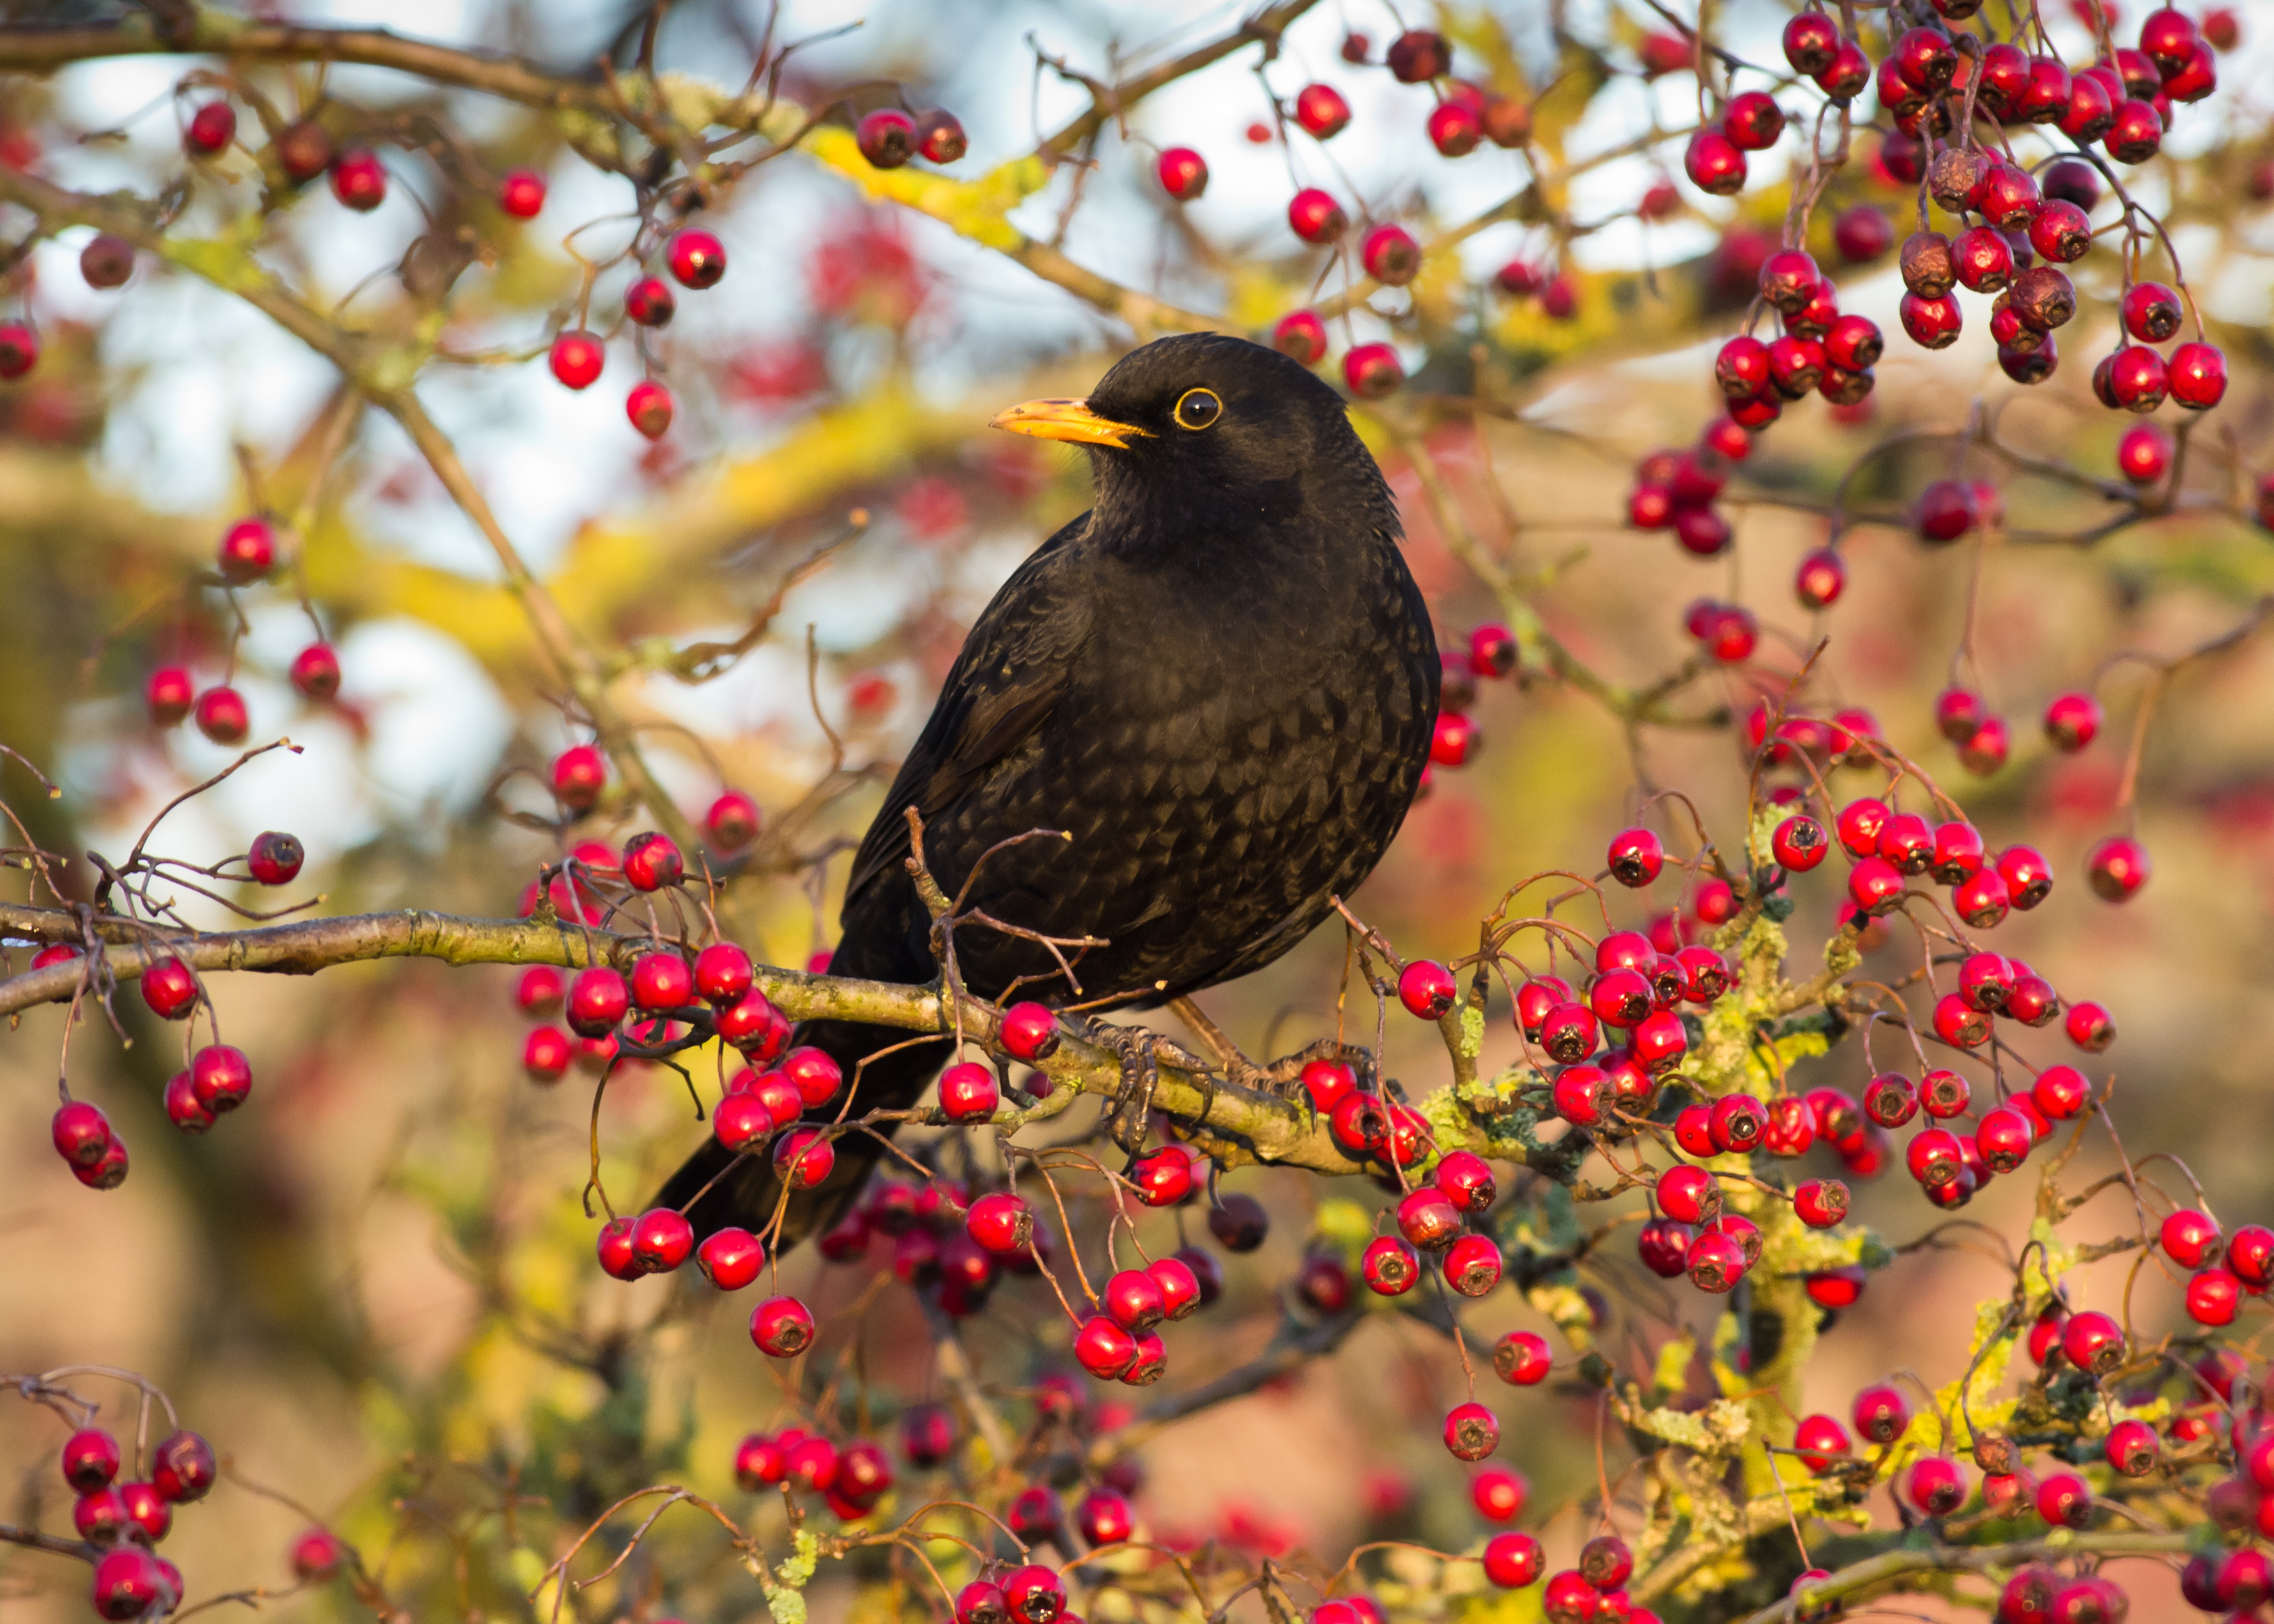 Birds feast on berries (Thinkstock/PA)